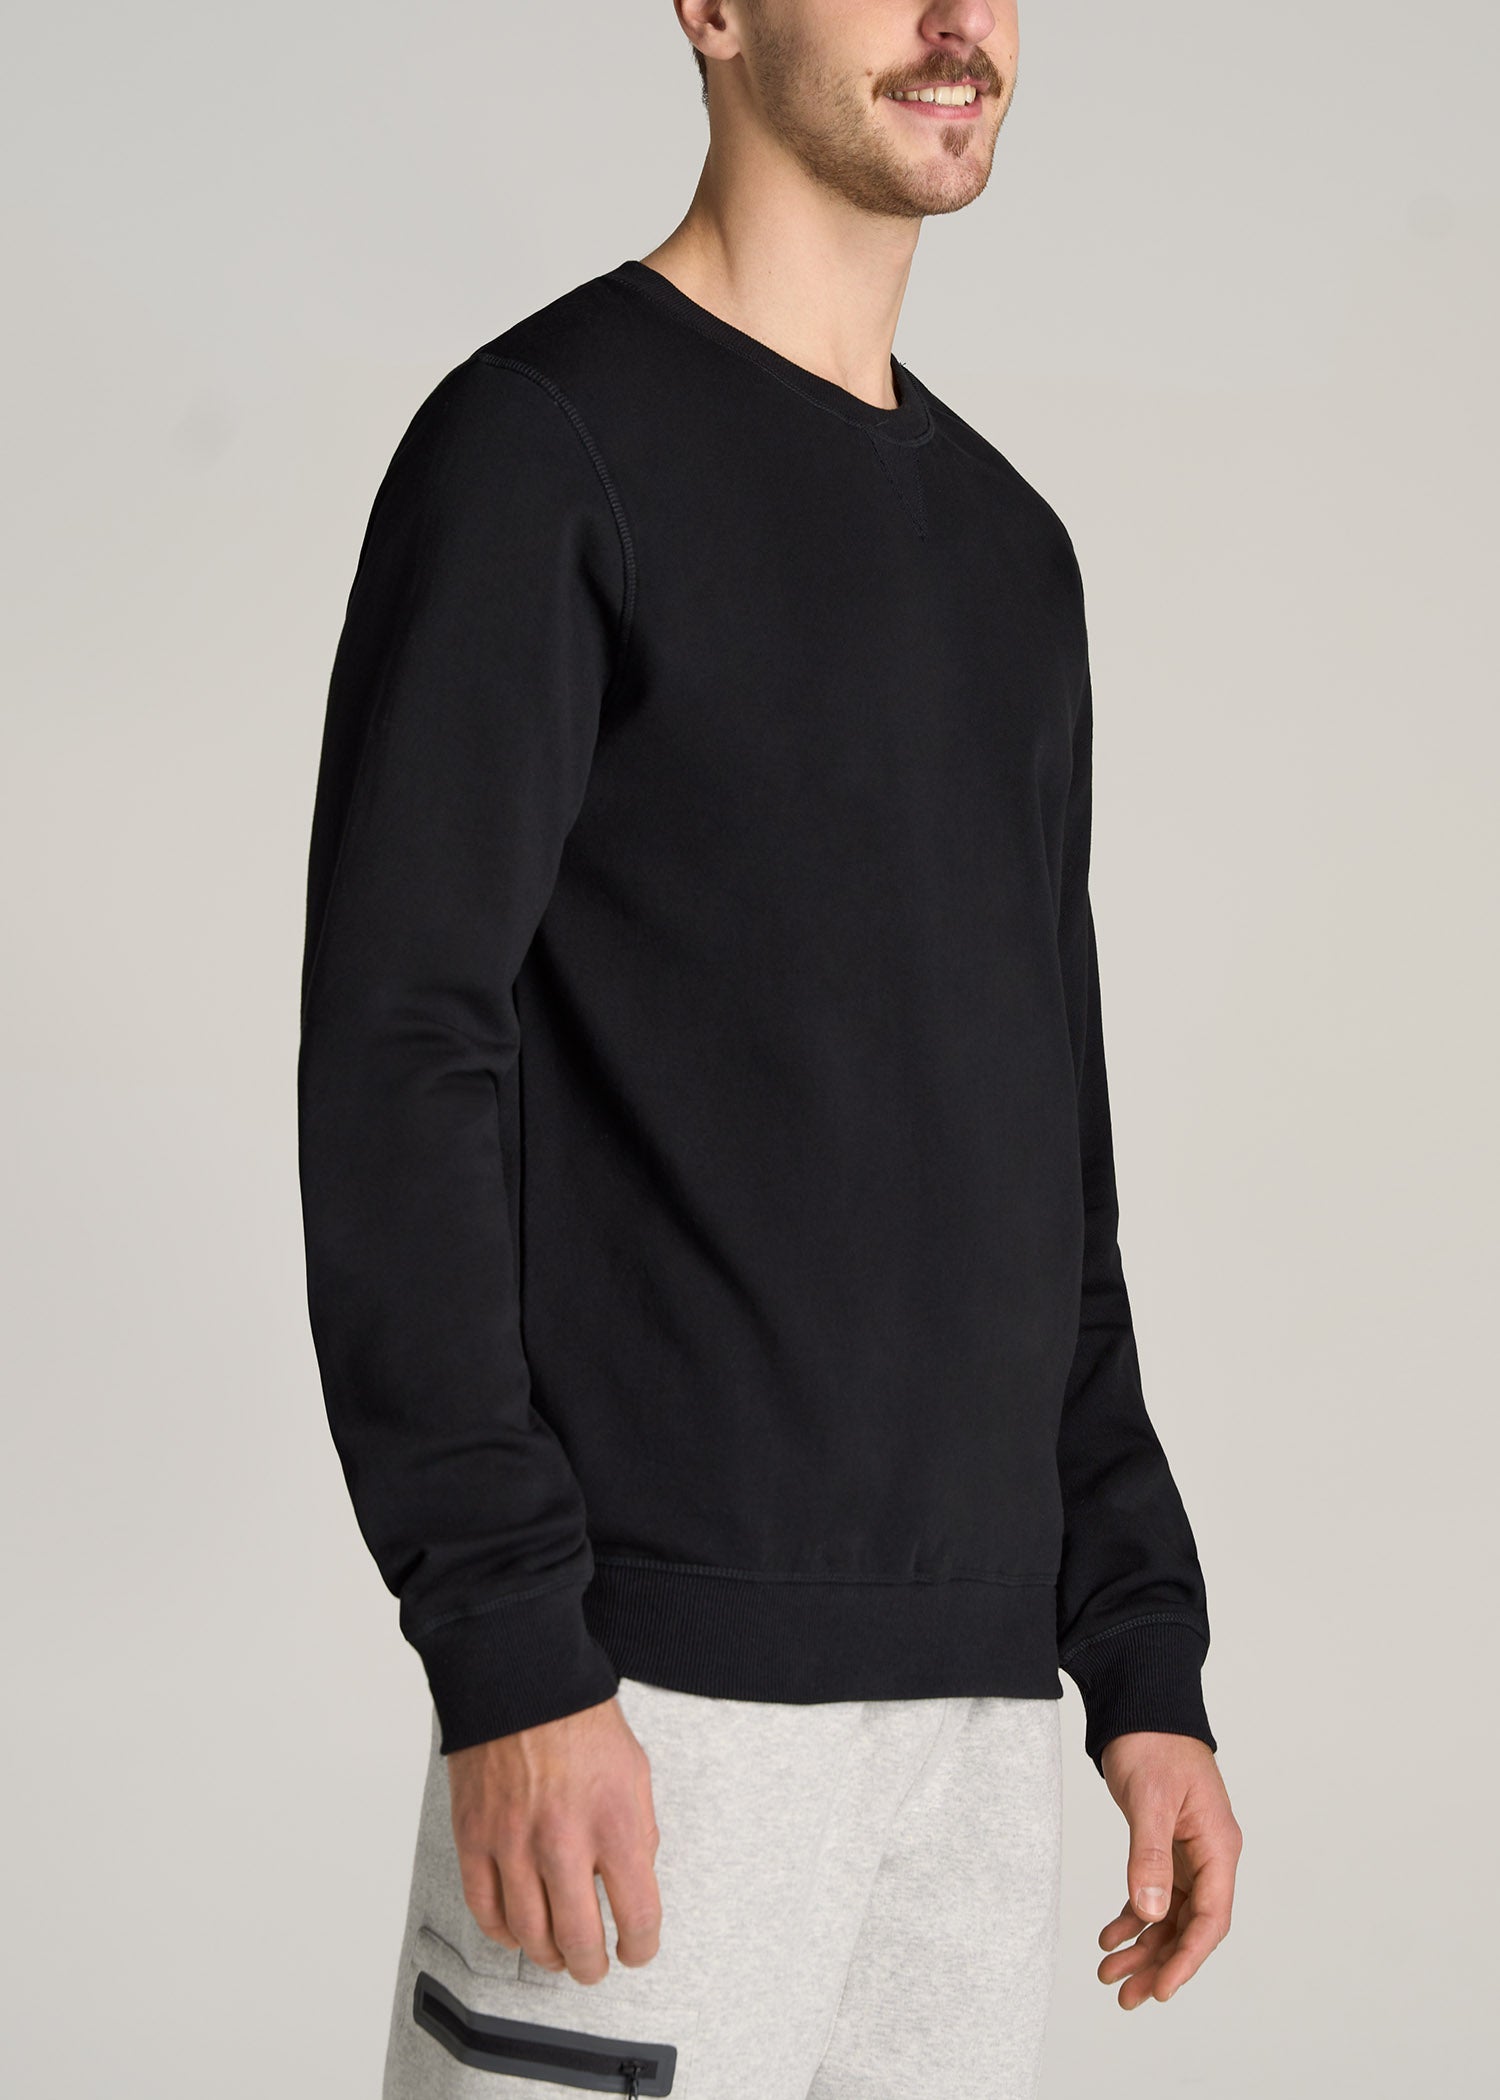 Calvin Klein Men's Modern Cotton Lounge Crewneck Sweatshirt, Black